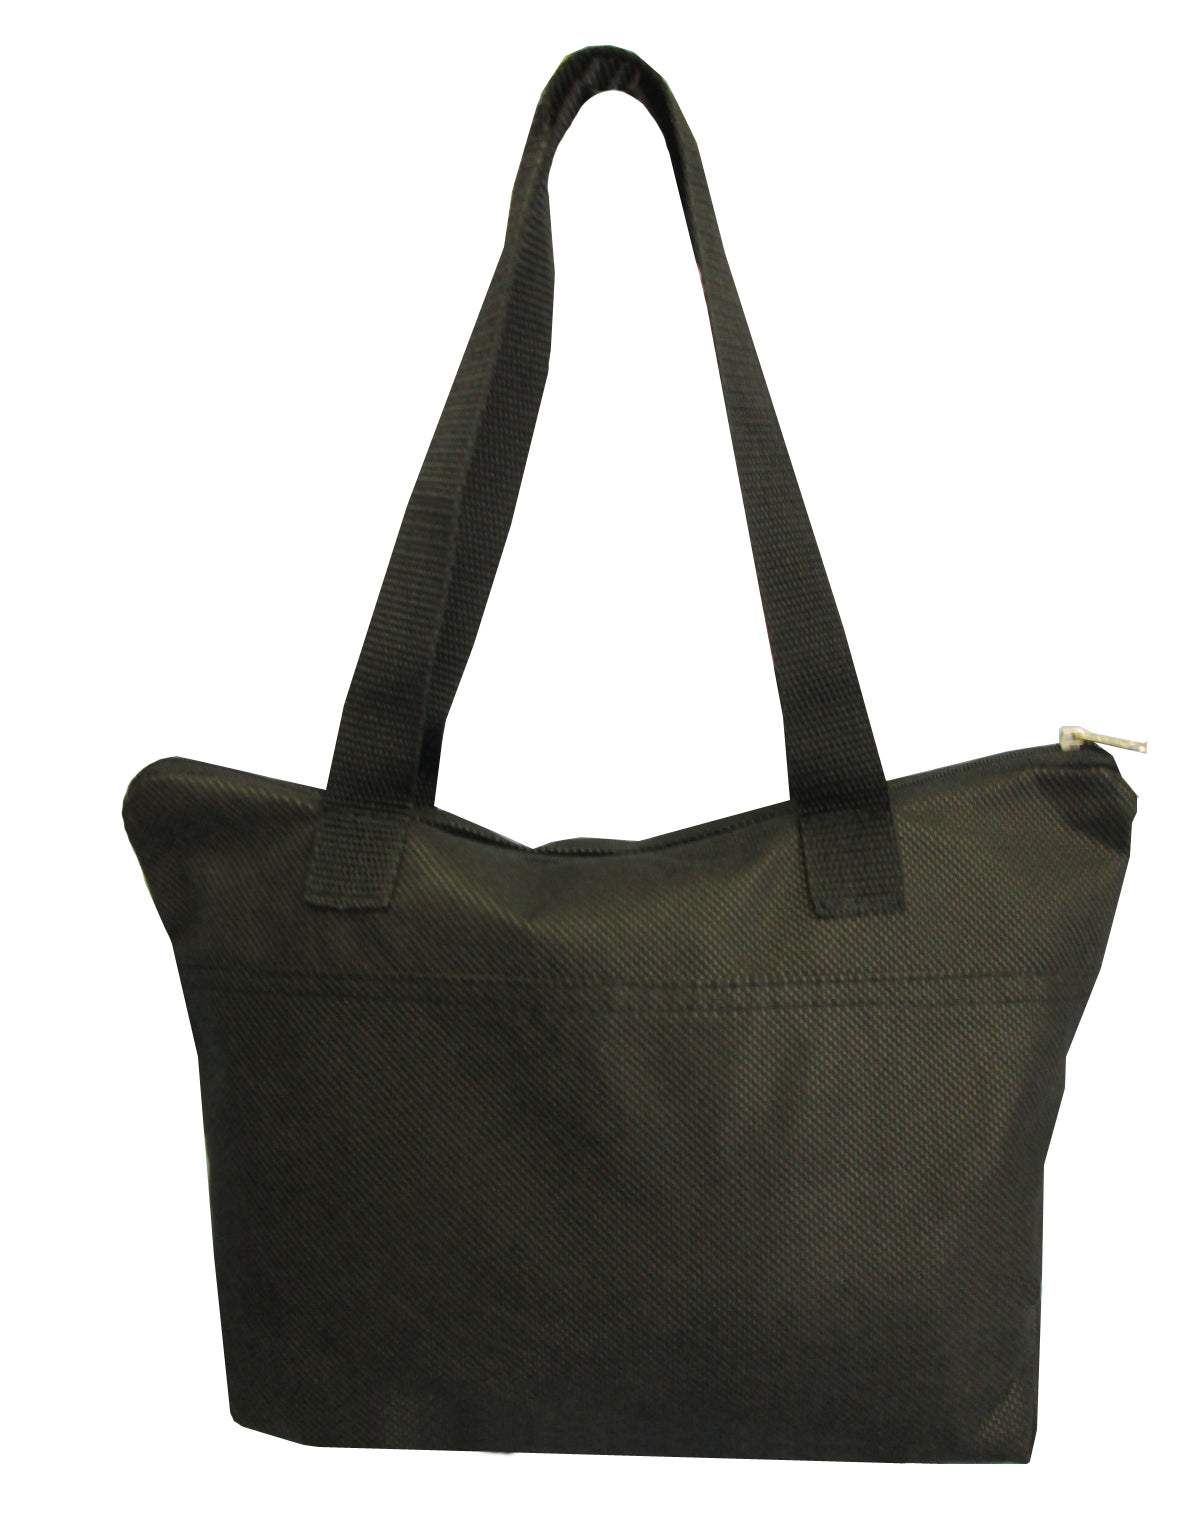 JLSB-0049 Sewn Bag